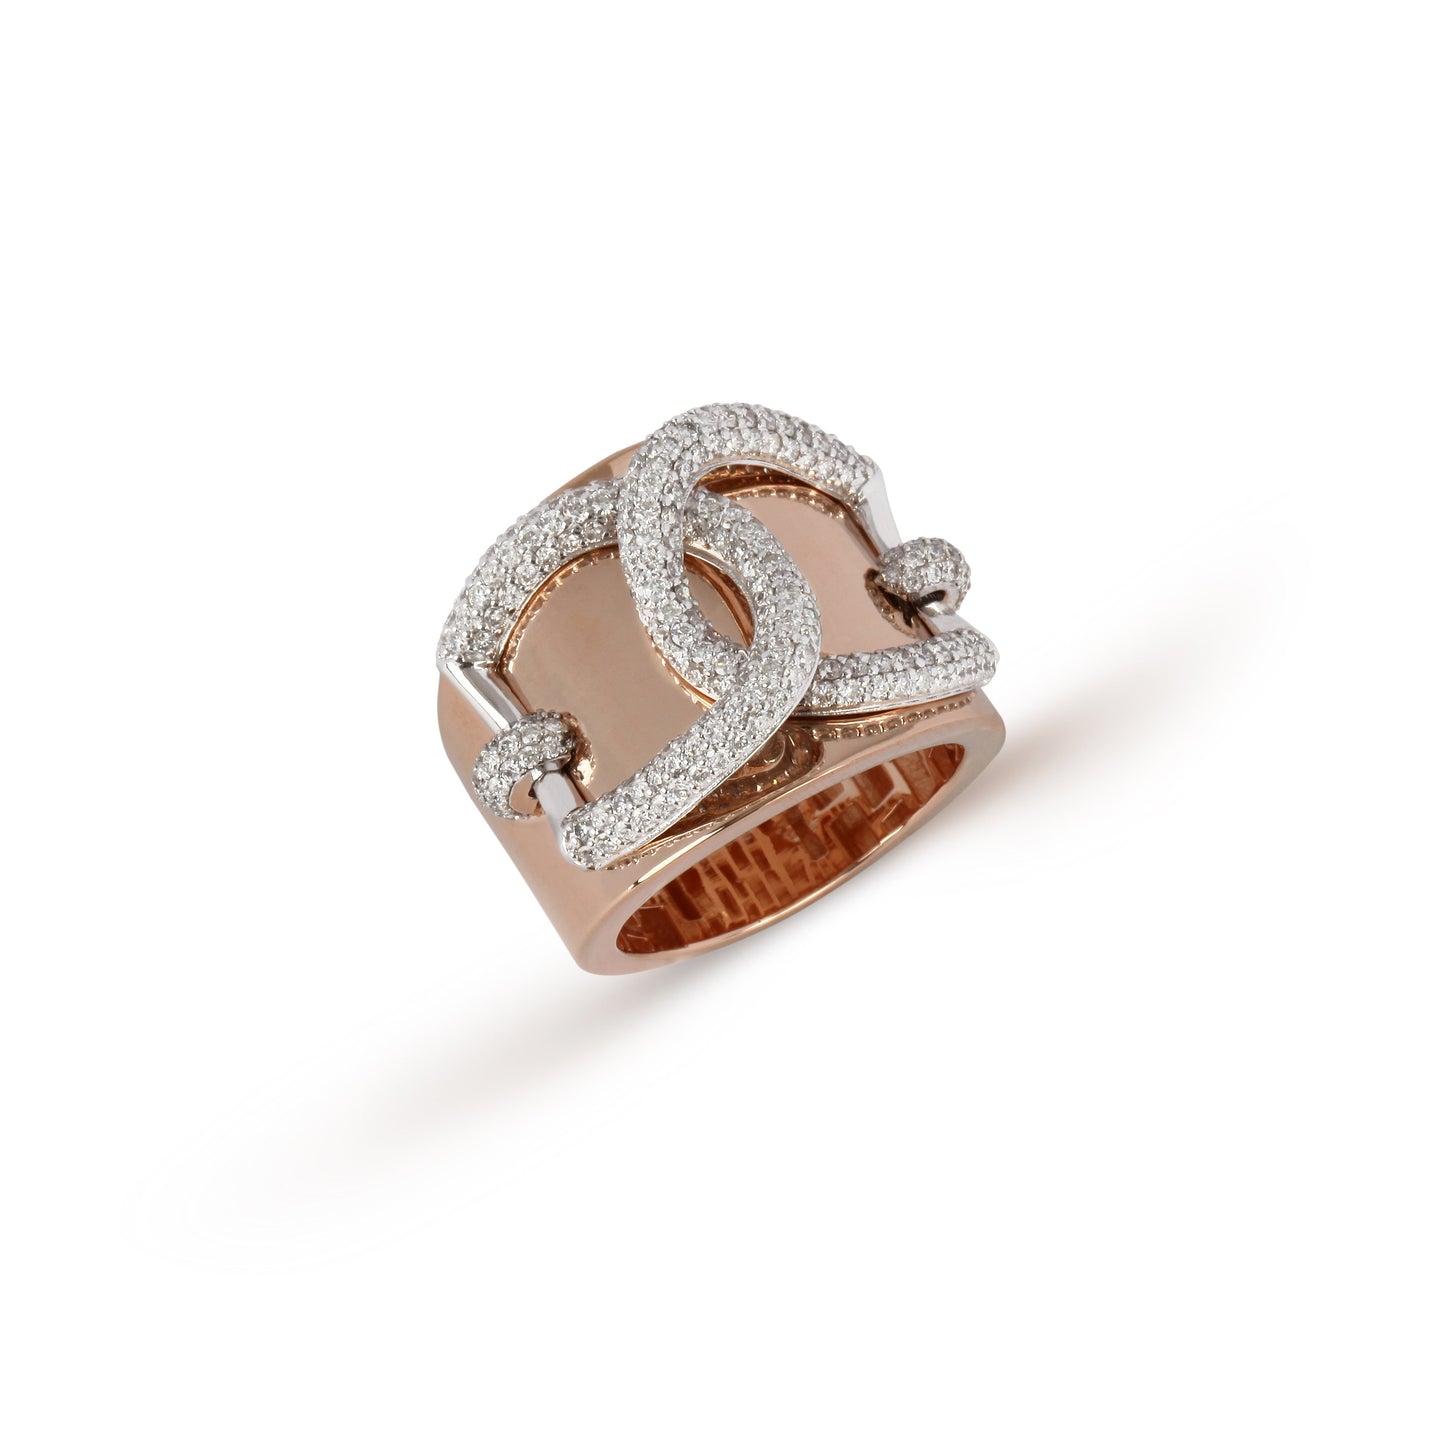 Intertwined Diamond Center Ring | best jewellery stores | diamond rings